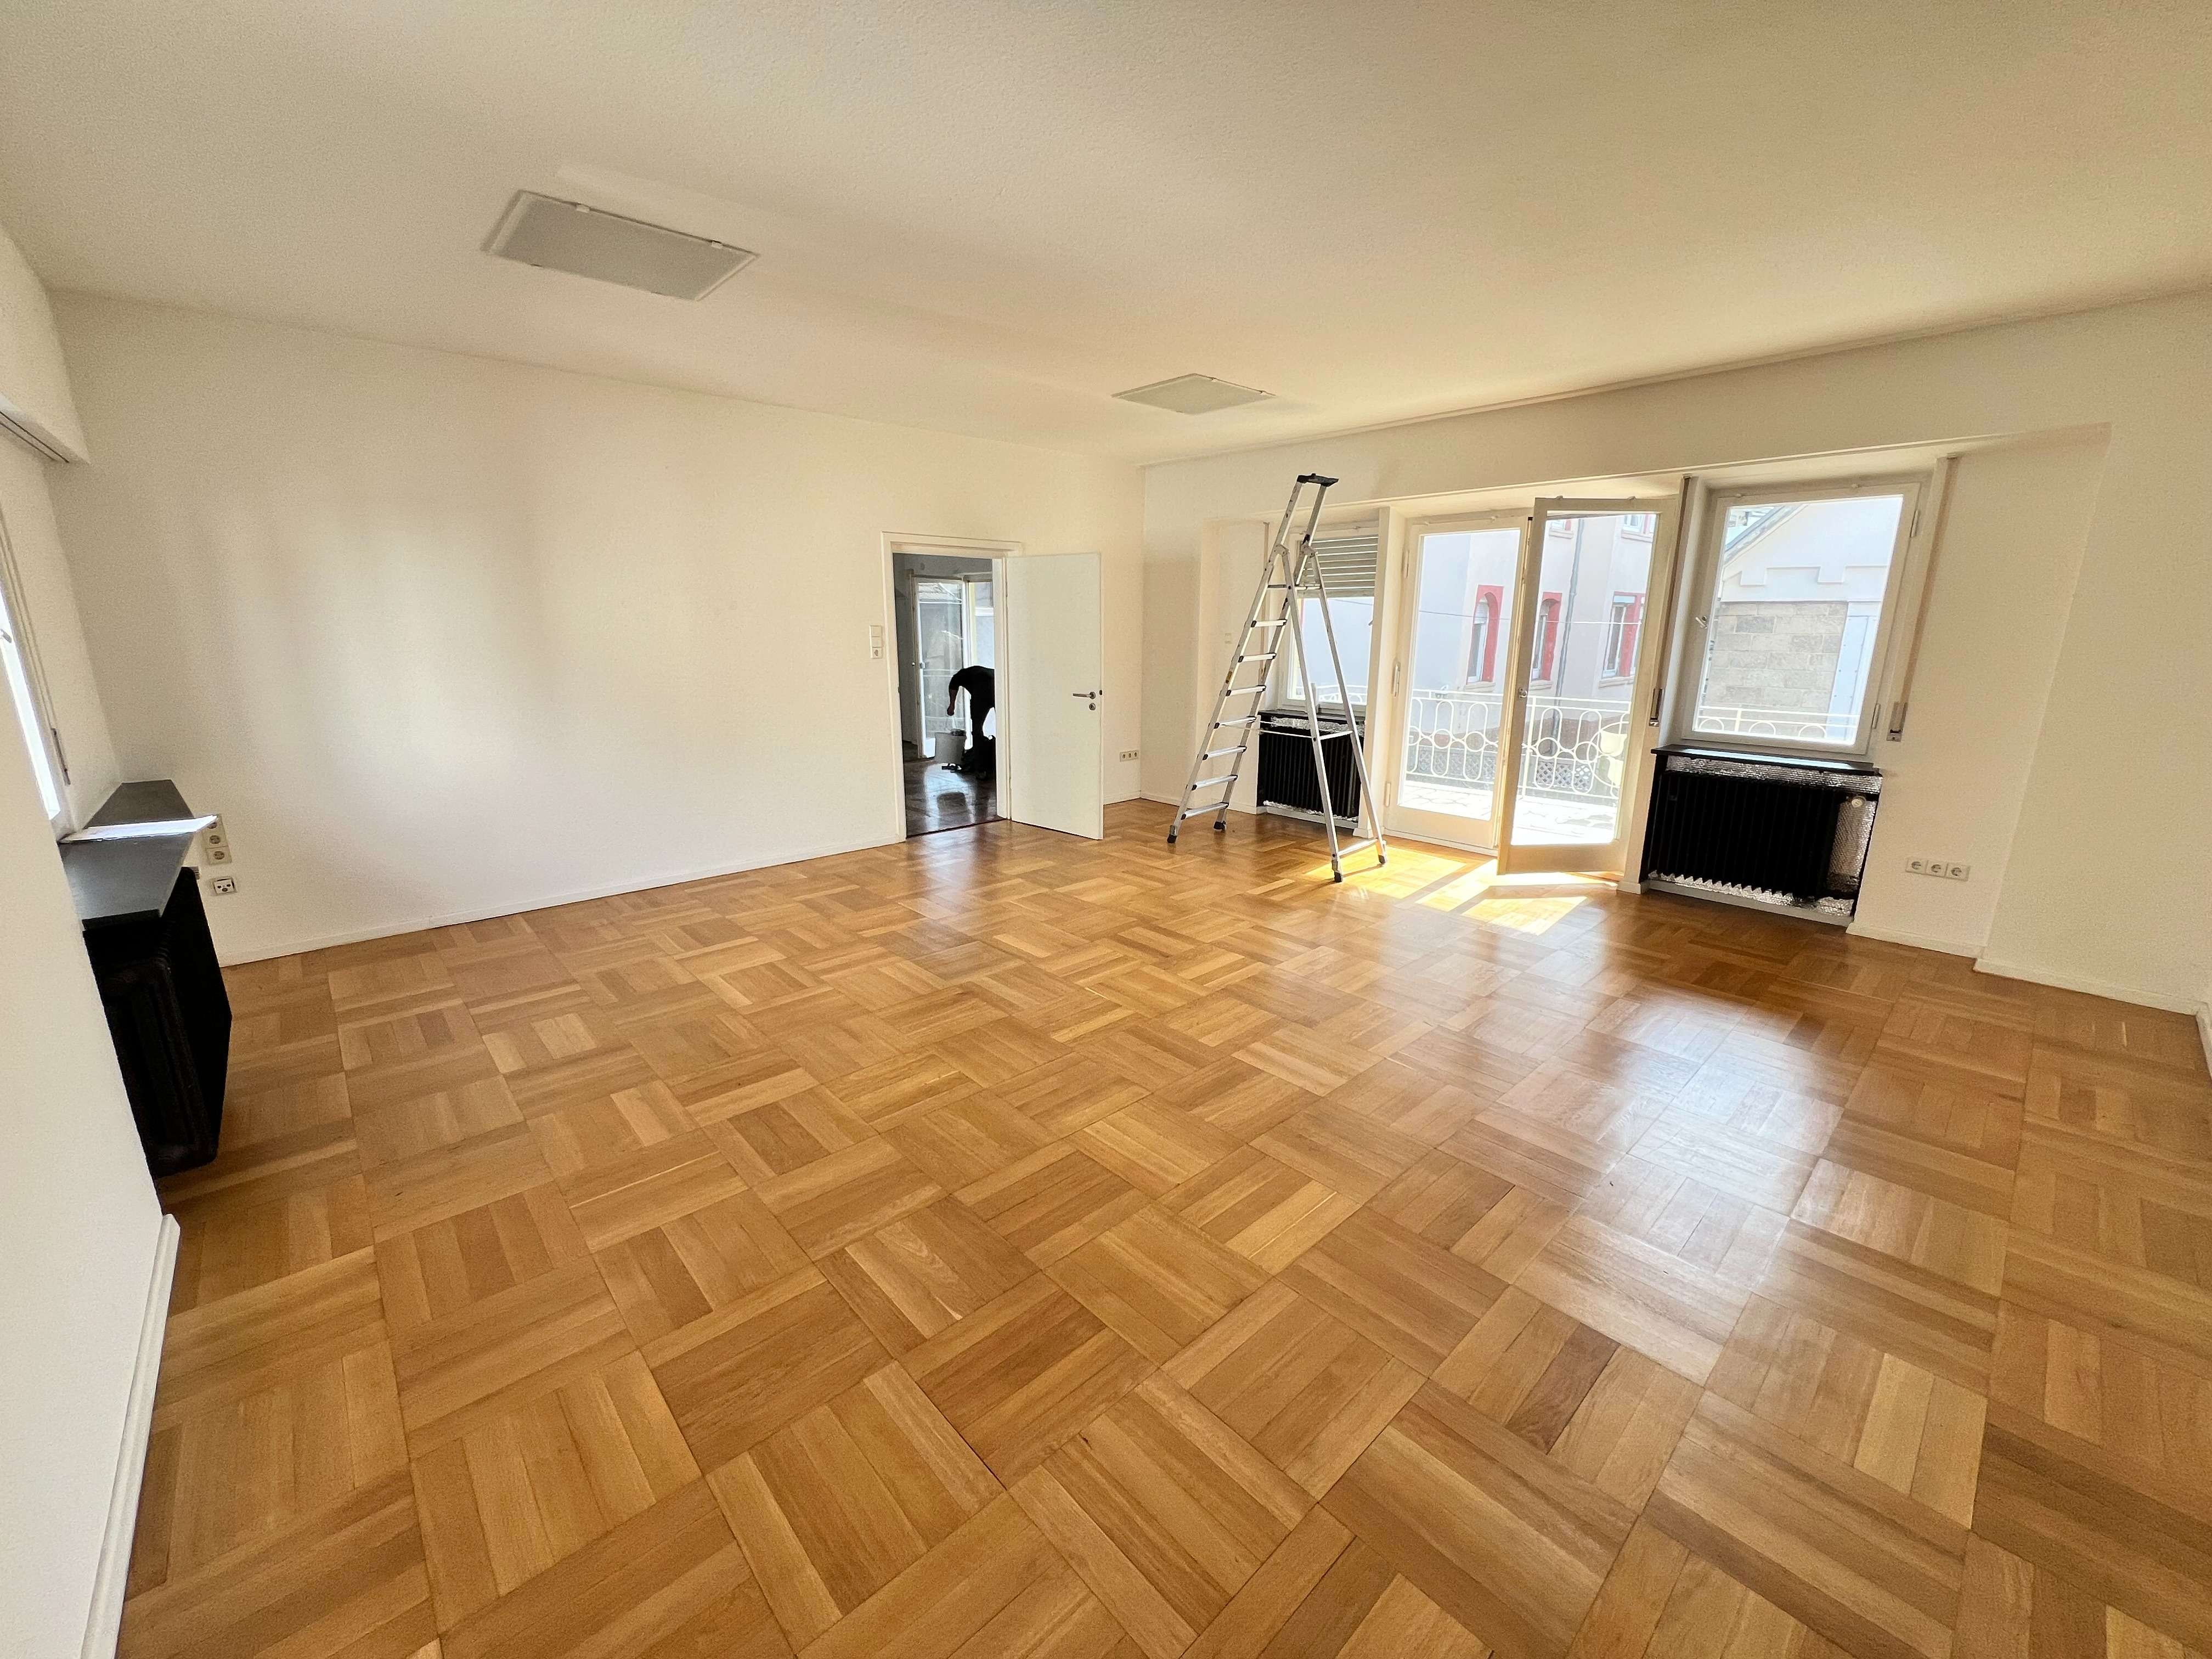 Wohnung zum Mieten in Esslingen am Neckar 1.250,00 € 124.5 m²